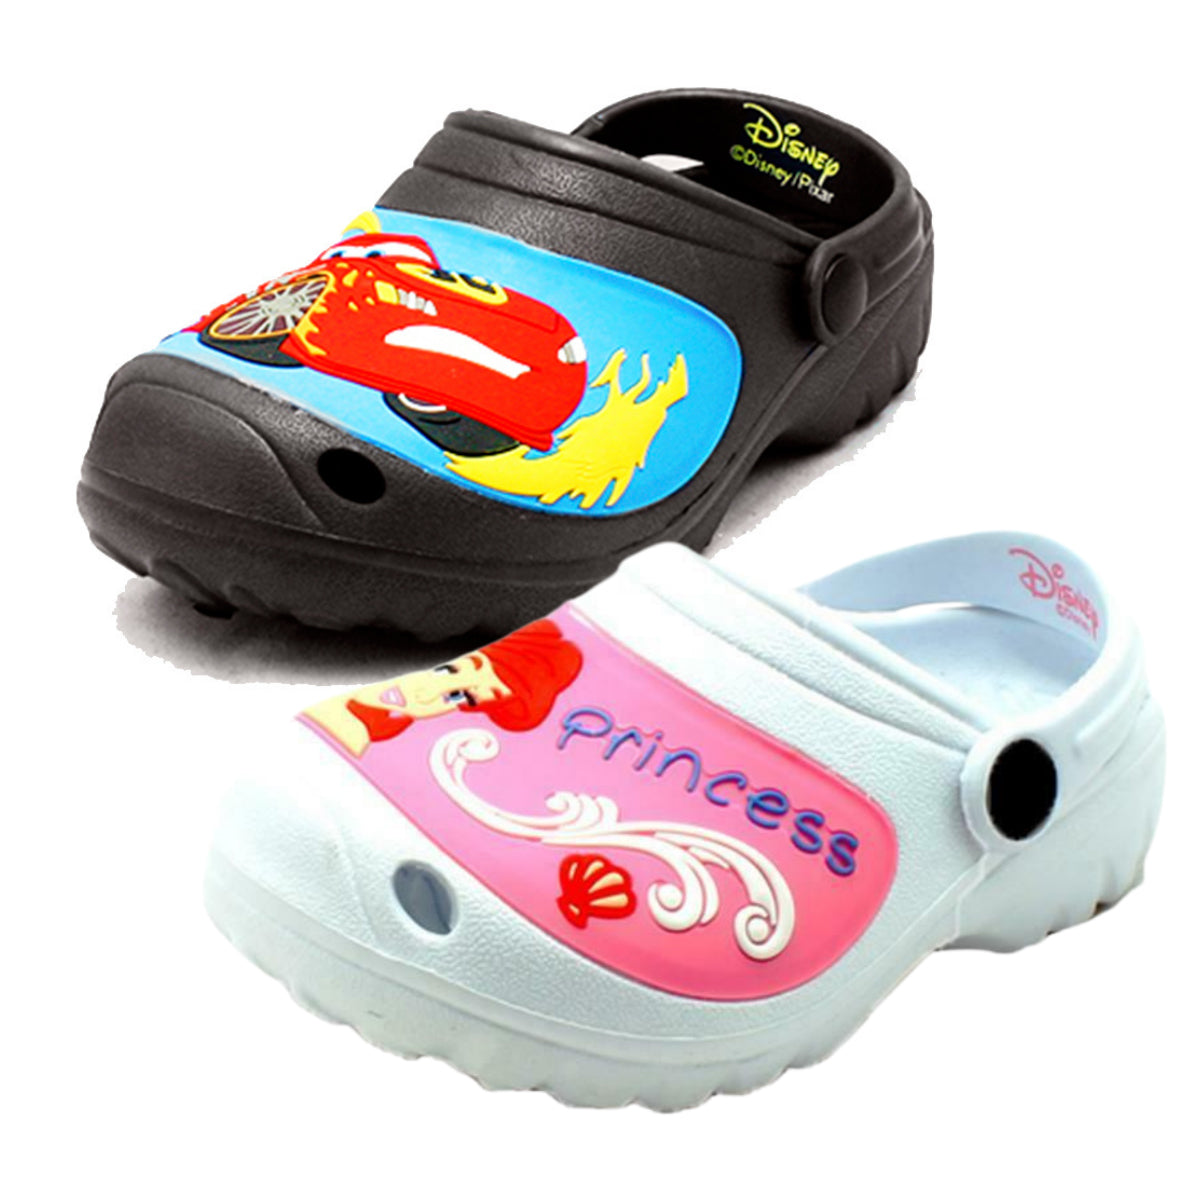 Childrens rubber beach shoes summer clog